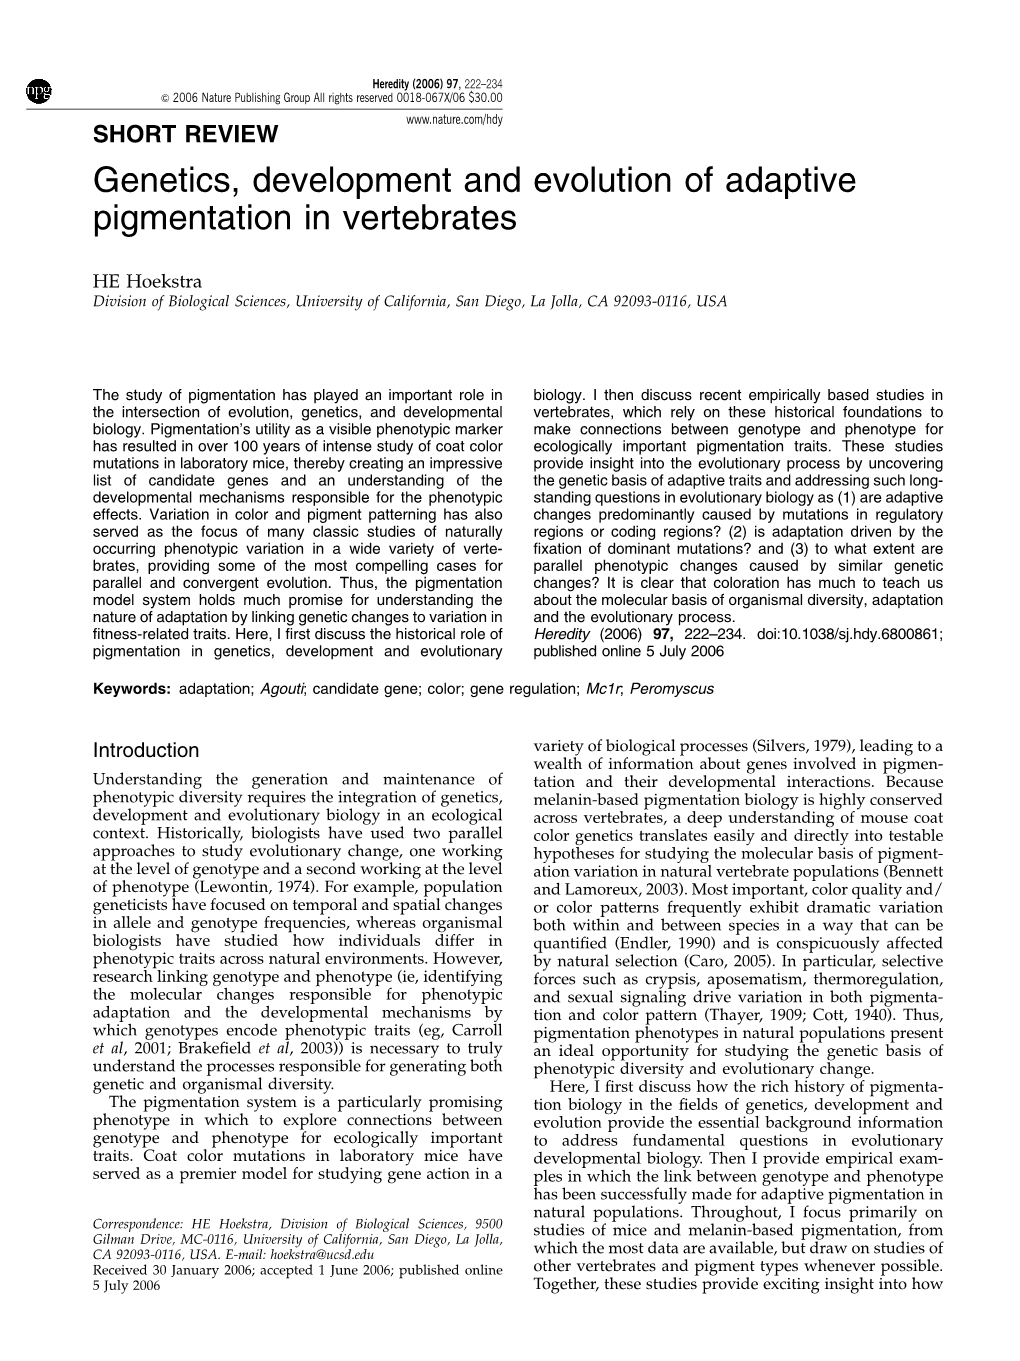 Genetics, Development and Evolution of Adaptive Pigmentation in Vertebrates